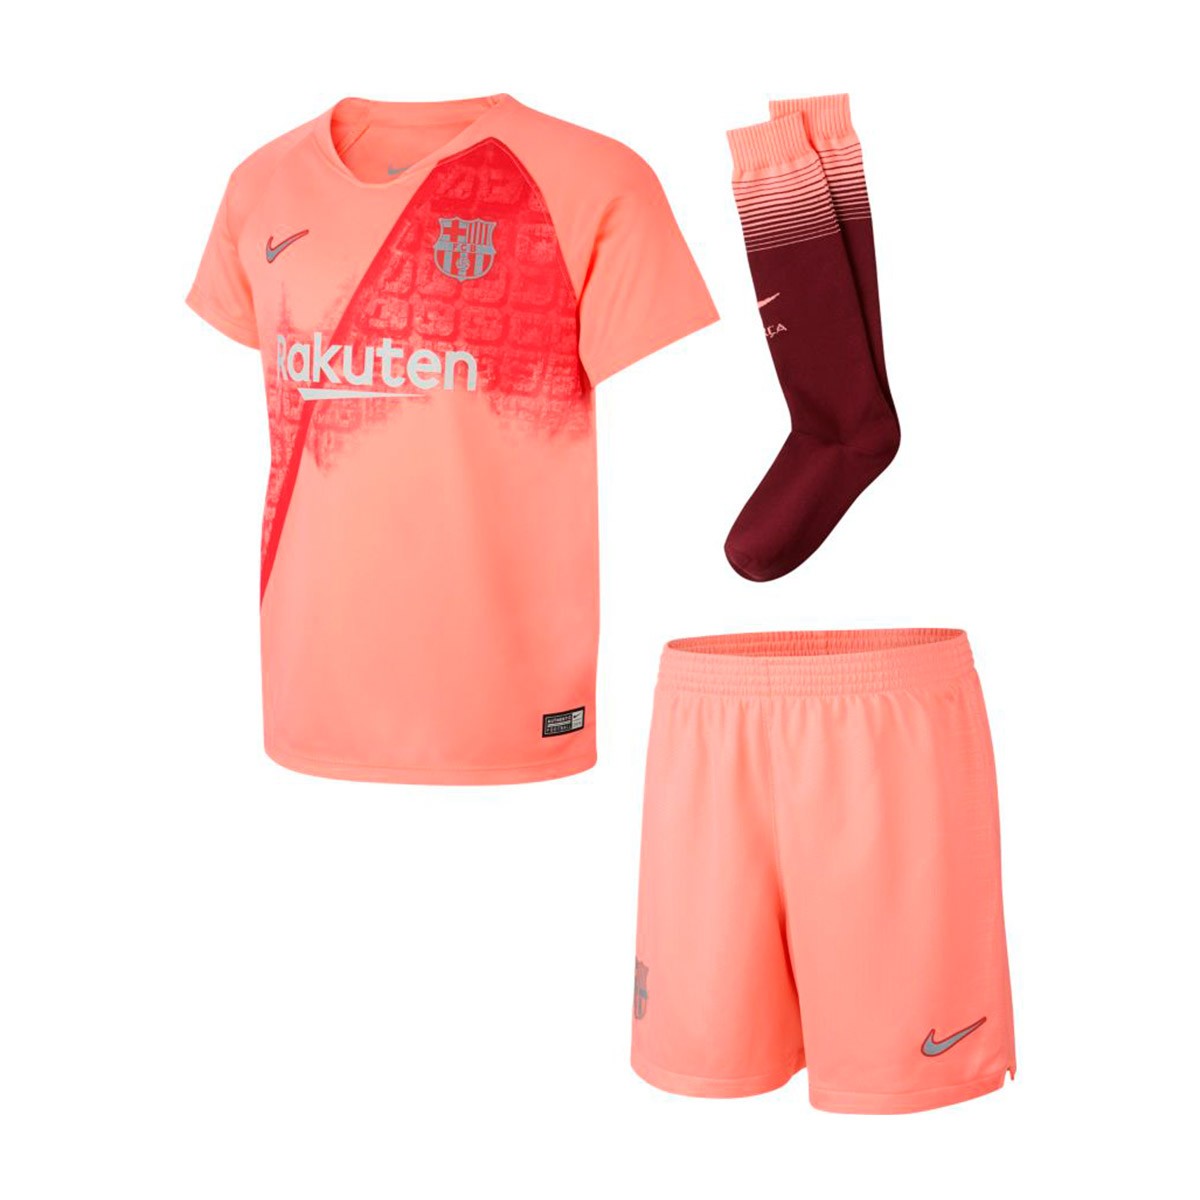 fc barcelona jersey pink